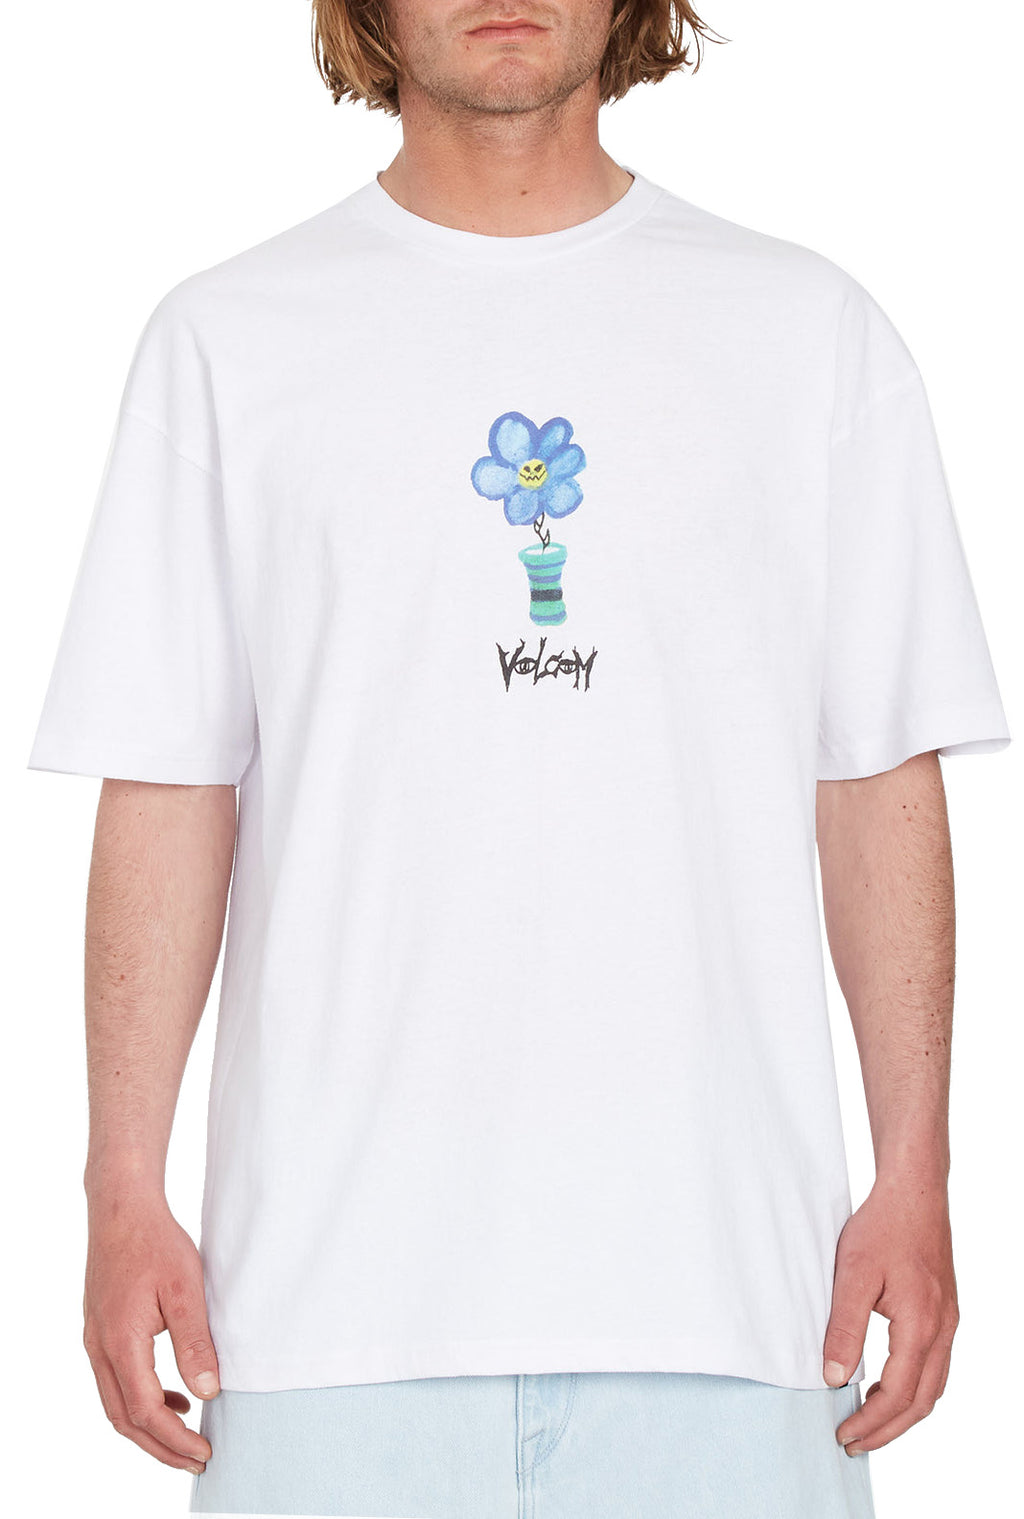  Volcom T-shirt Issamtherapy Ss White Bianco Uomo - 2